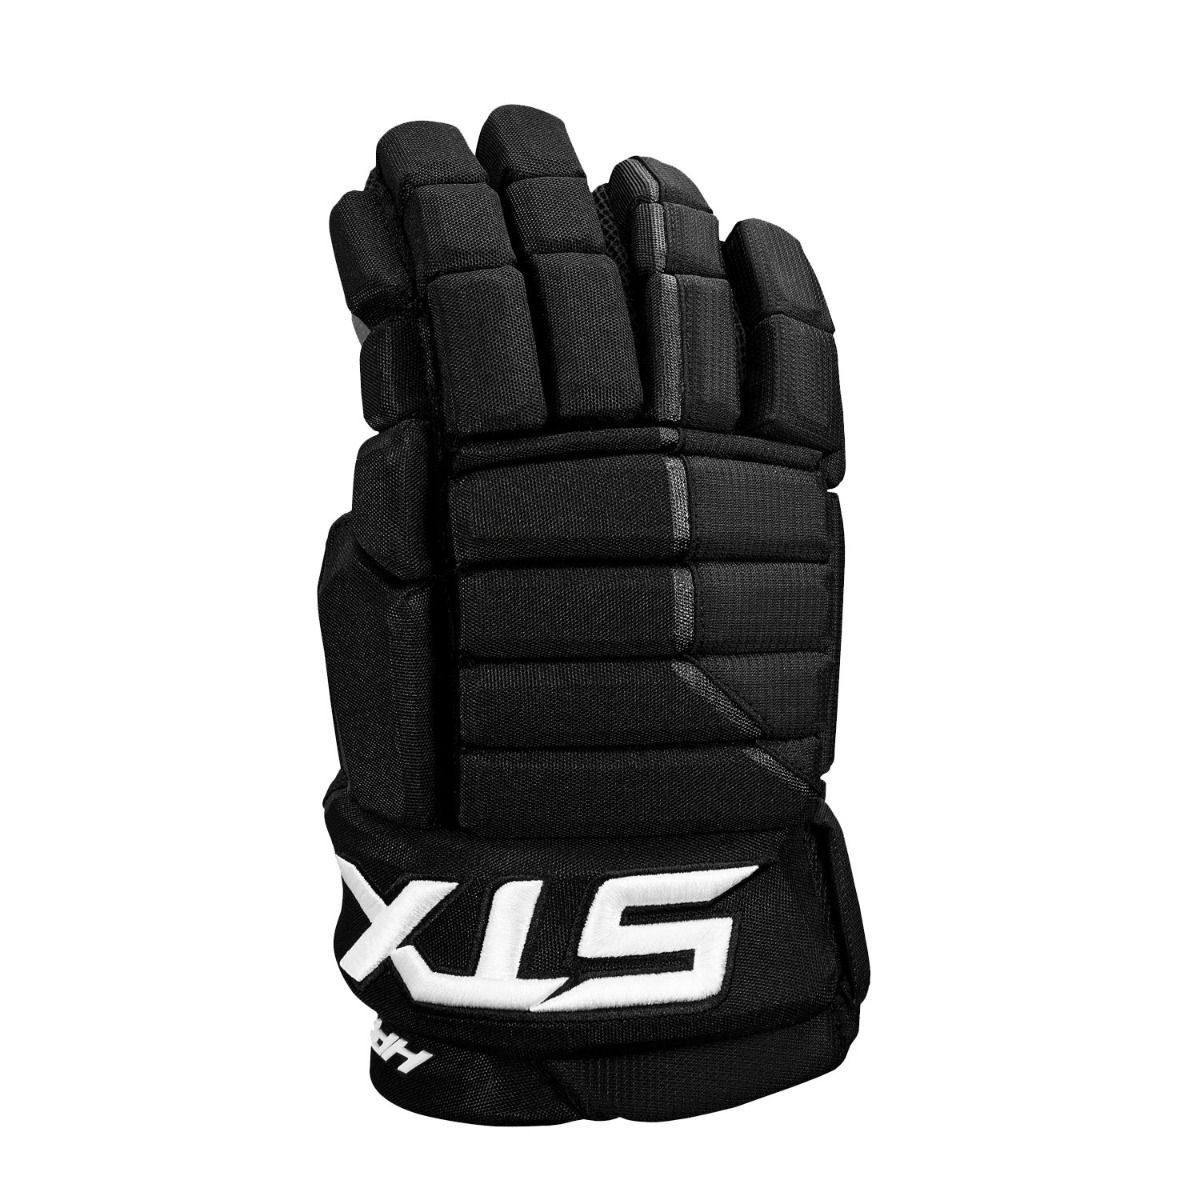 STX Stallion HPR 2 Ice Hockey Gloves